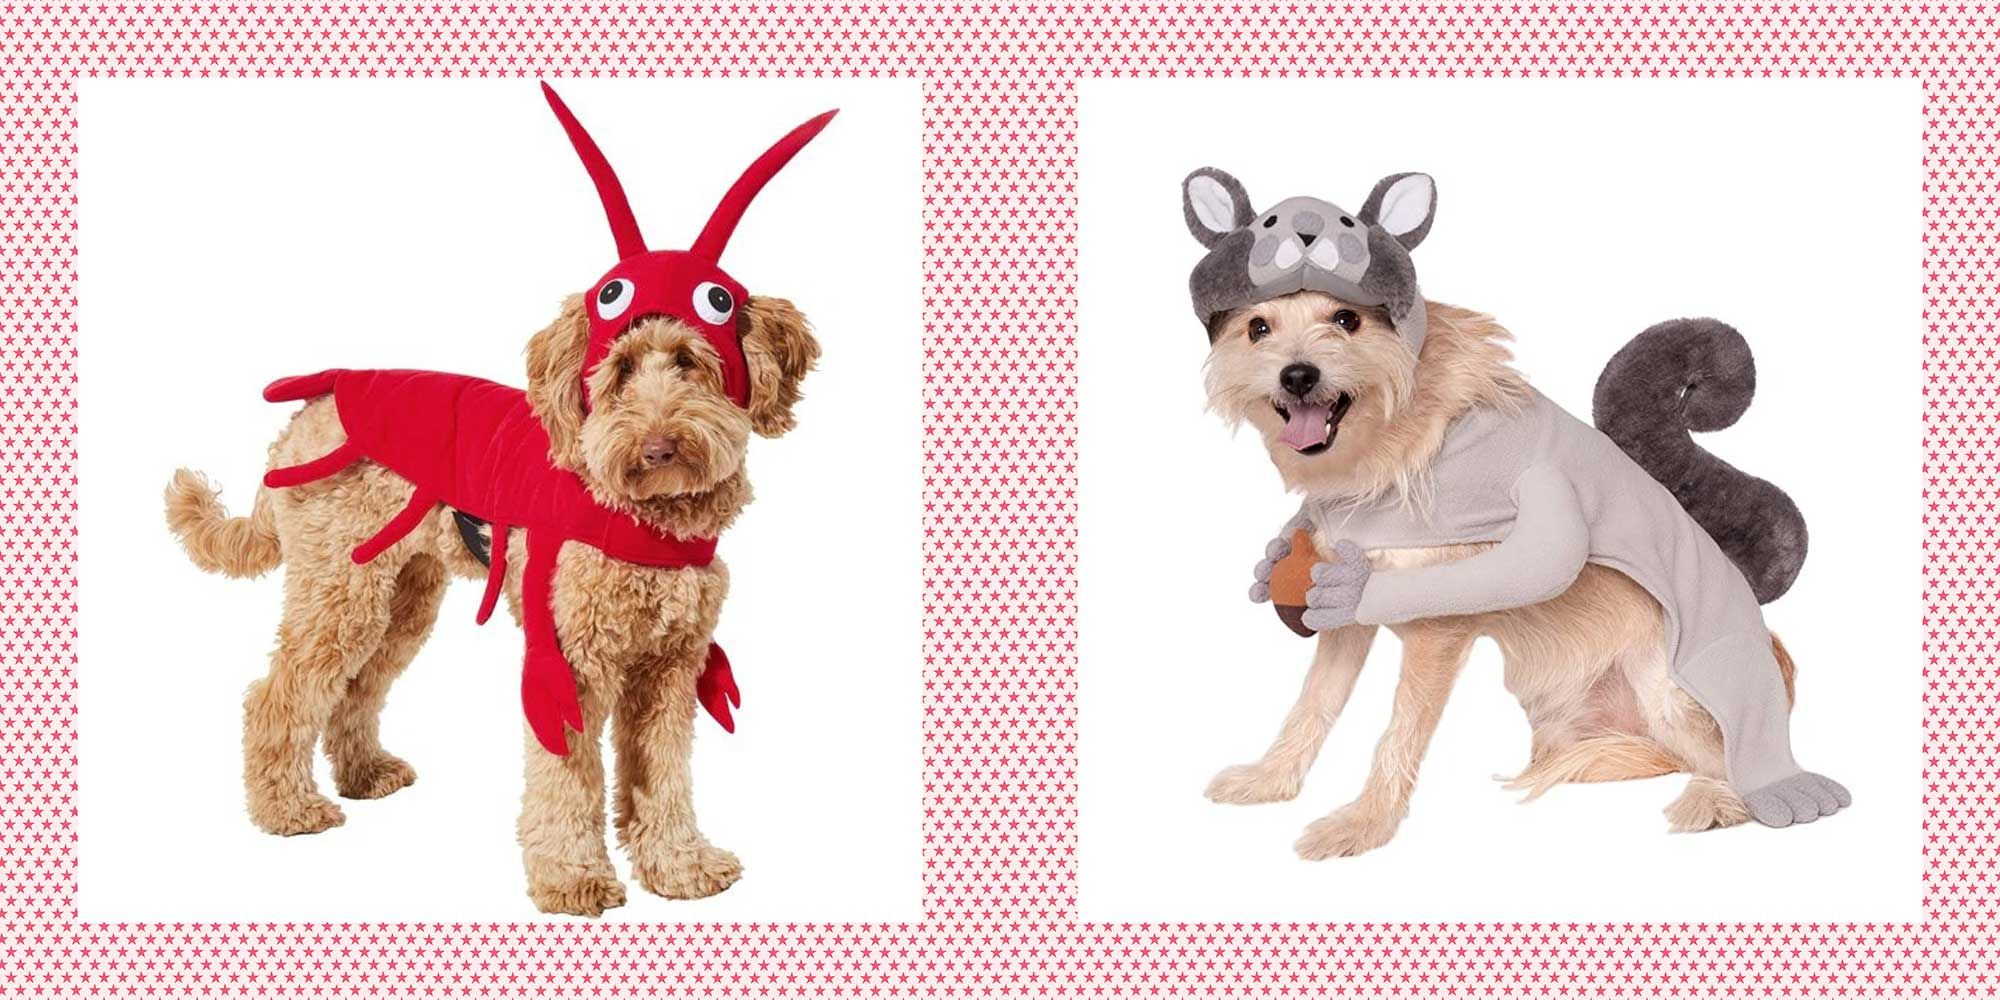 Toddler Shaggy Sheep Dog Costume